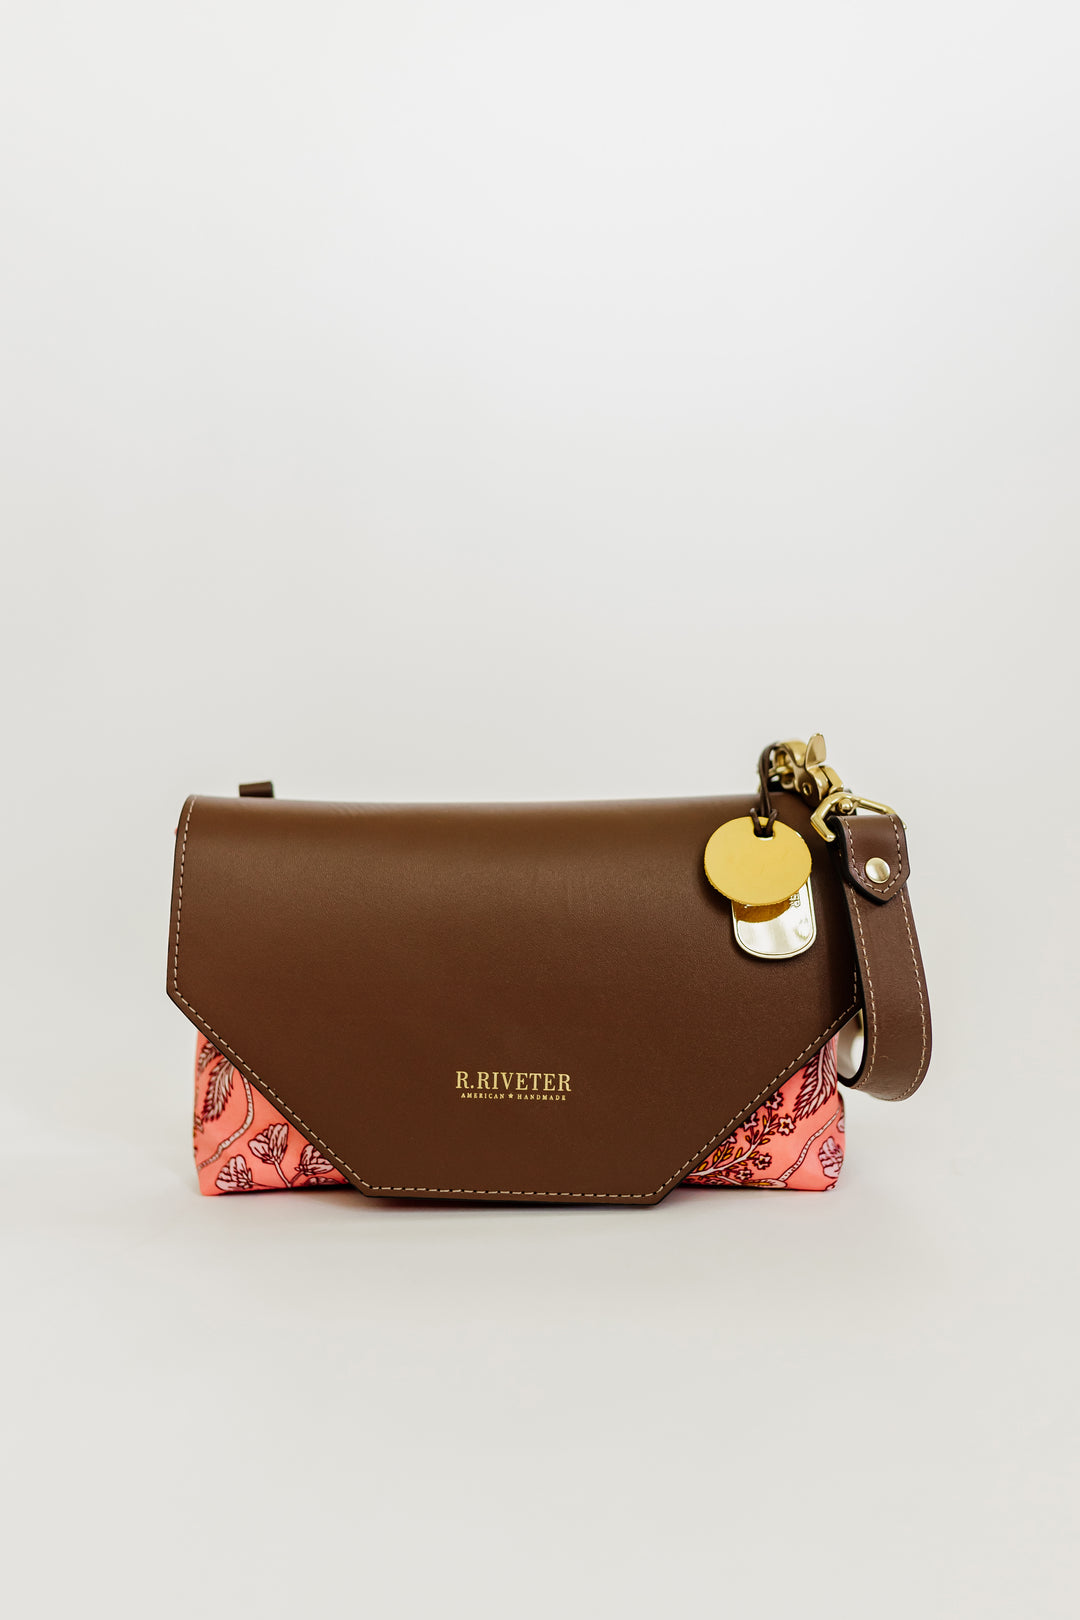 Patton | Rose Bandana Printed Nylon + Brown Leather Saddle Bag